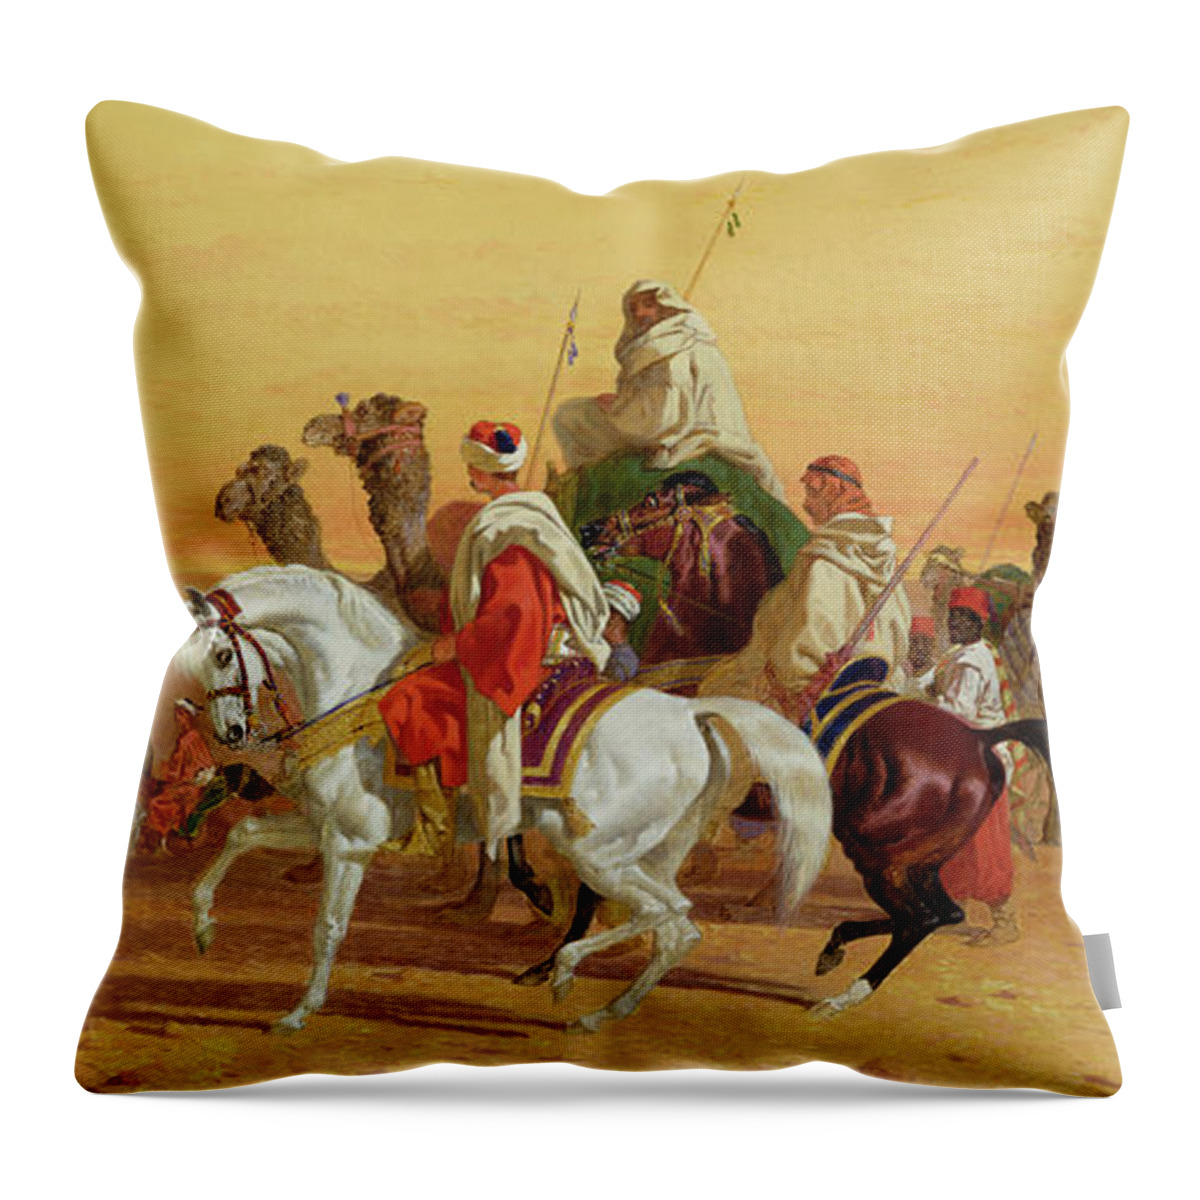 Caravan Throw Pillow featuring the painting An Arab Caravan by John Frederick Herring Snr